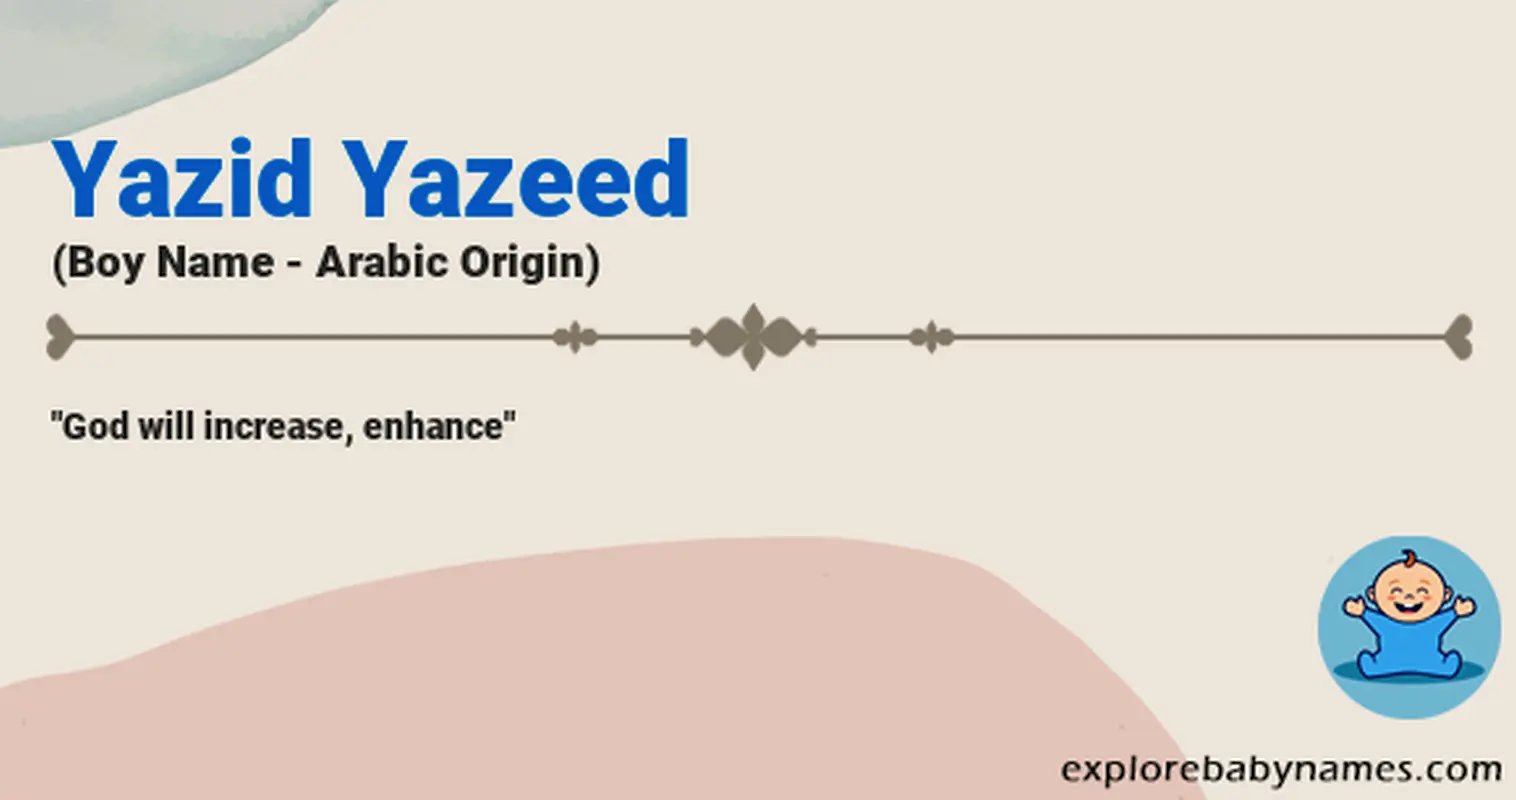 Meaning of Yazid Yazeed